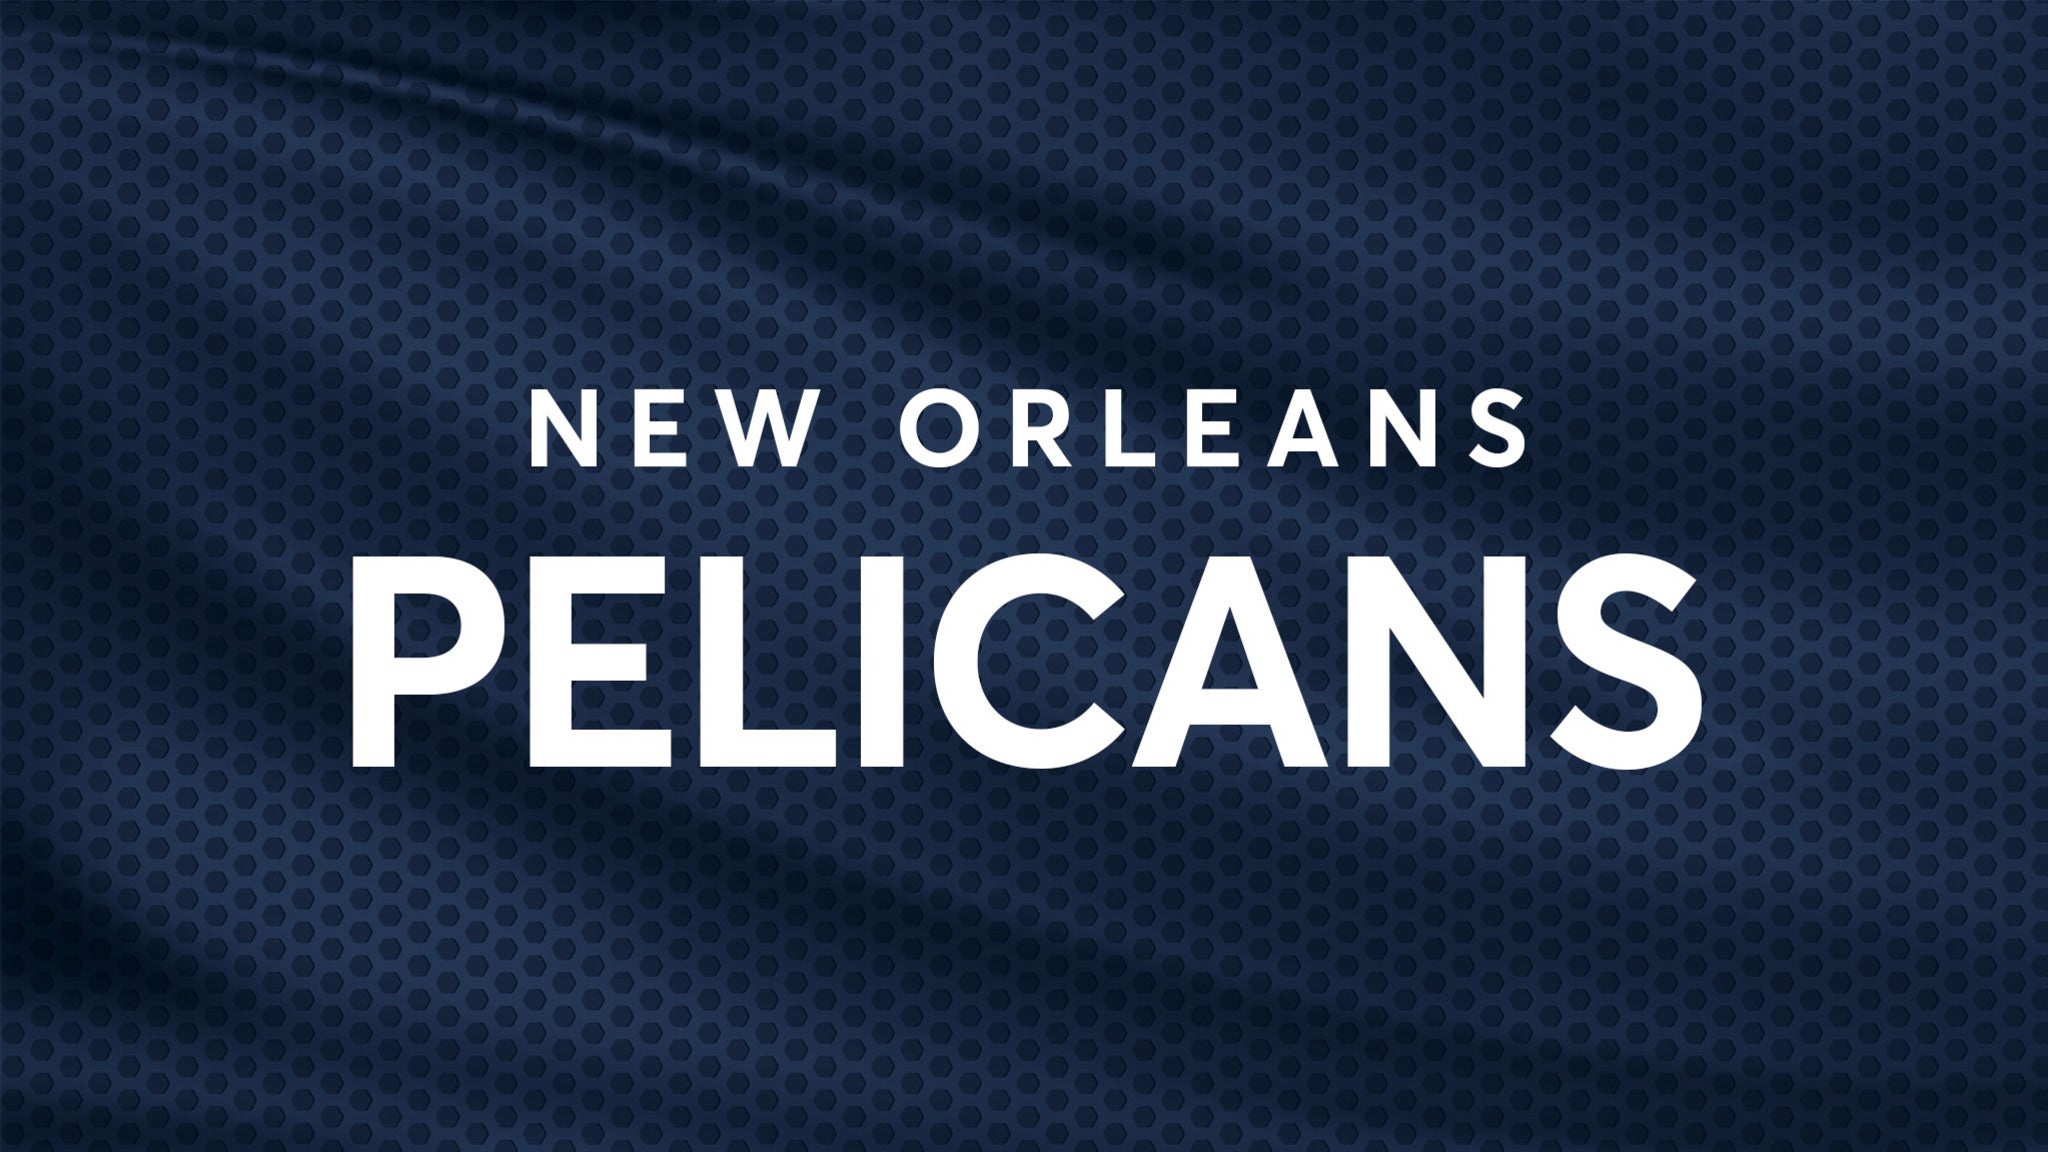 New Orleans Pelicans vs. Dallas Mavericks